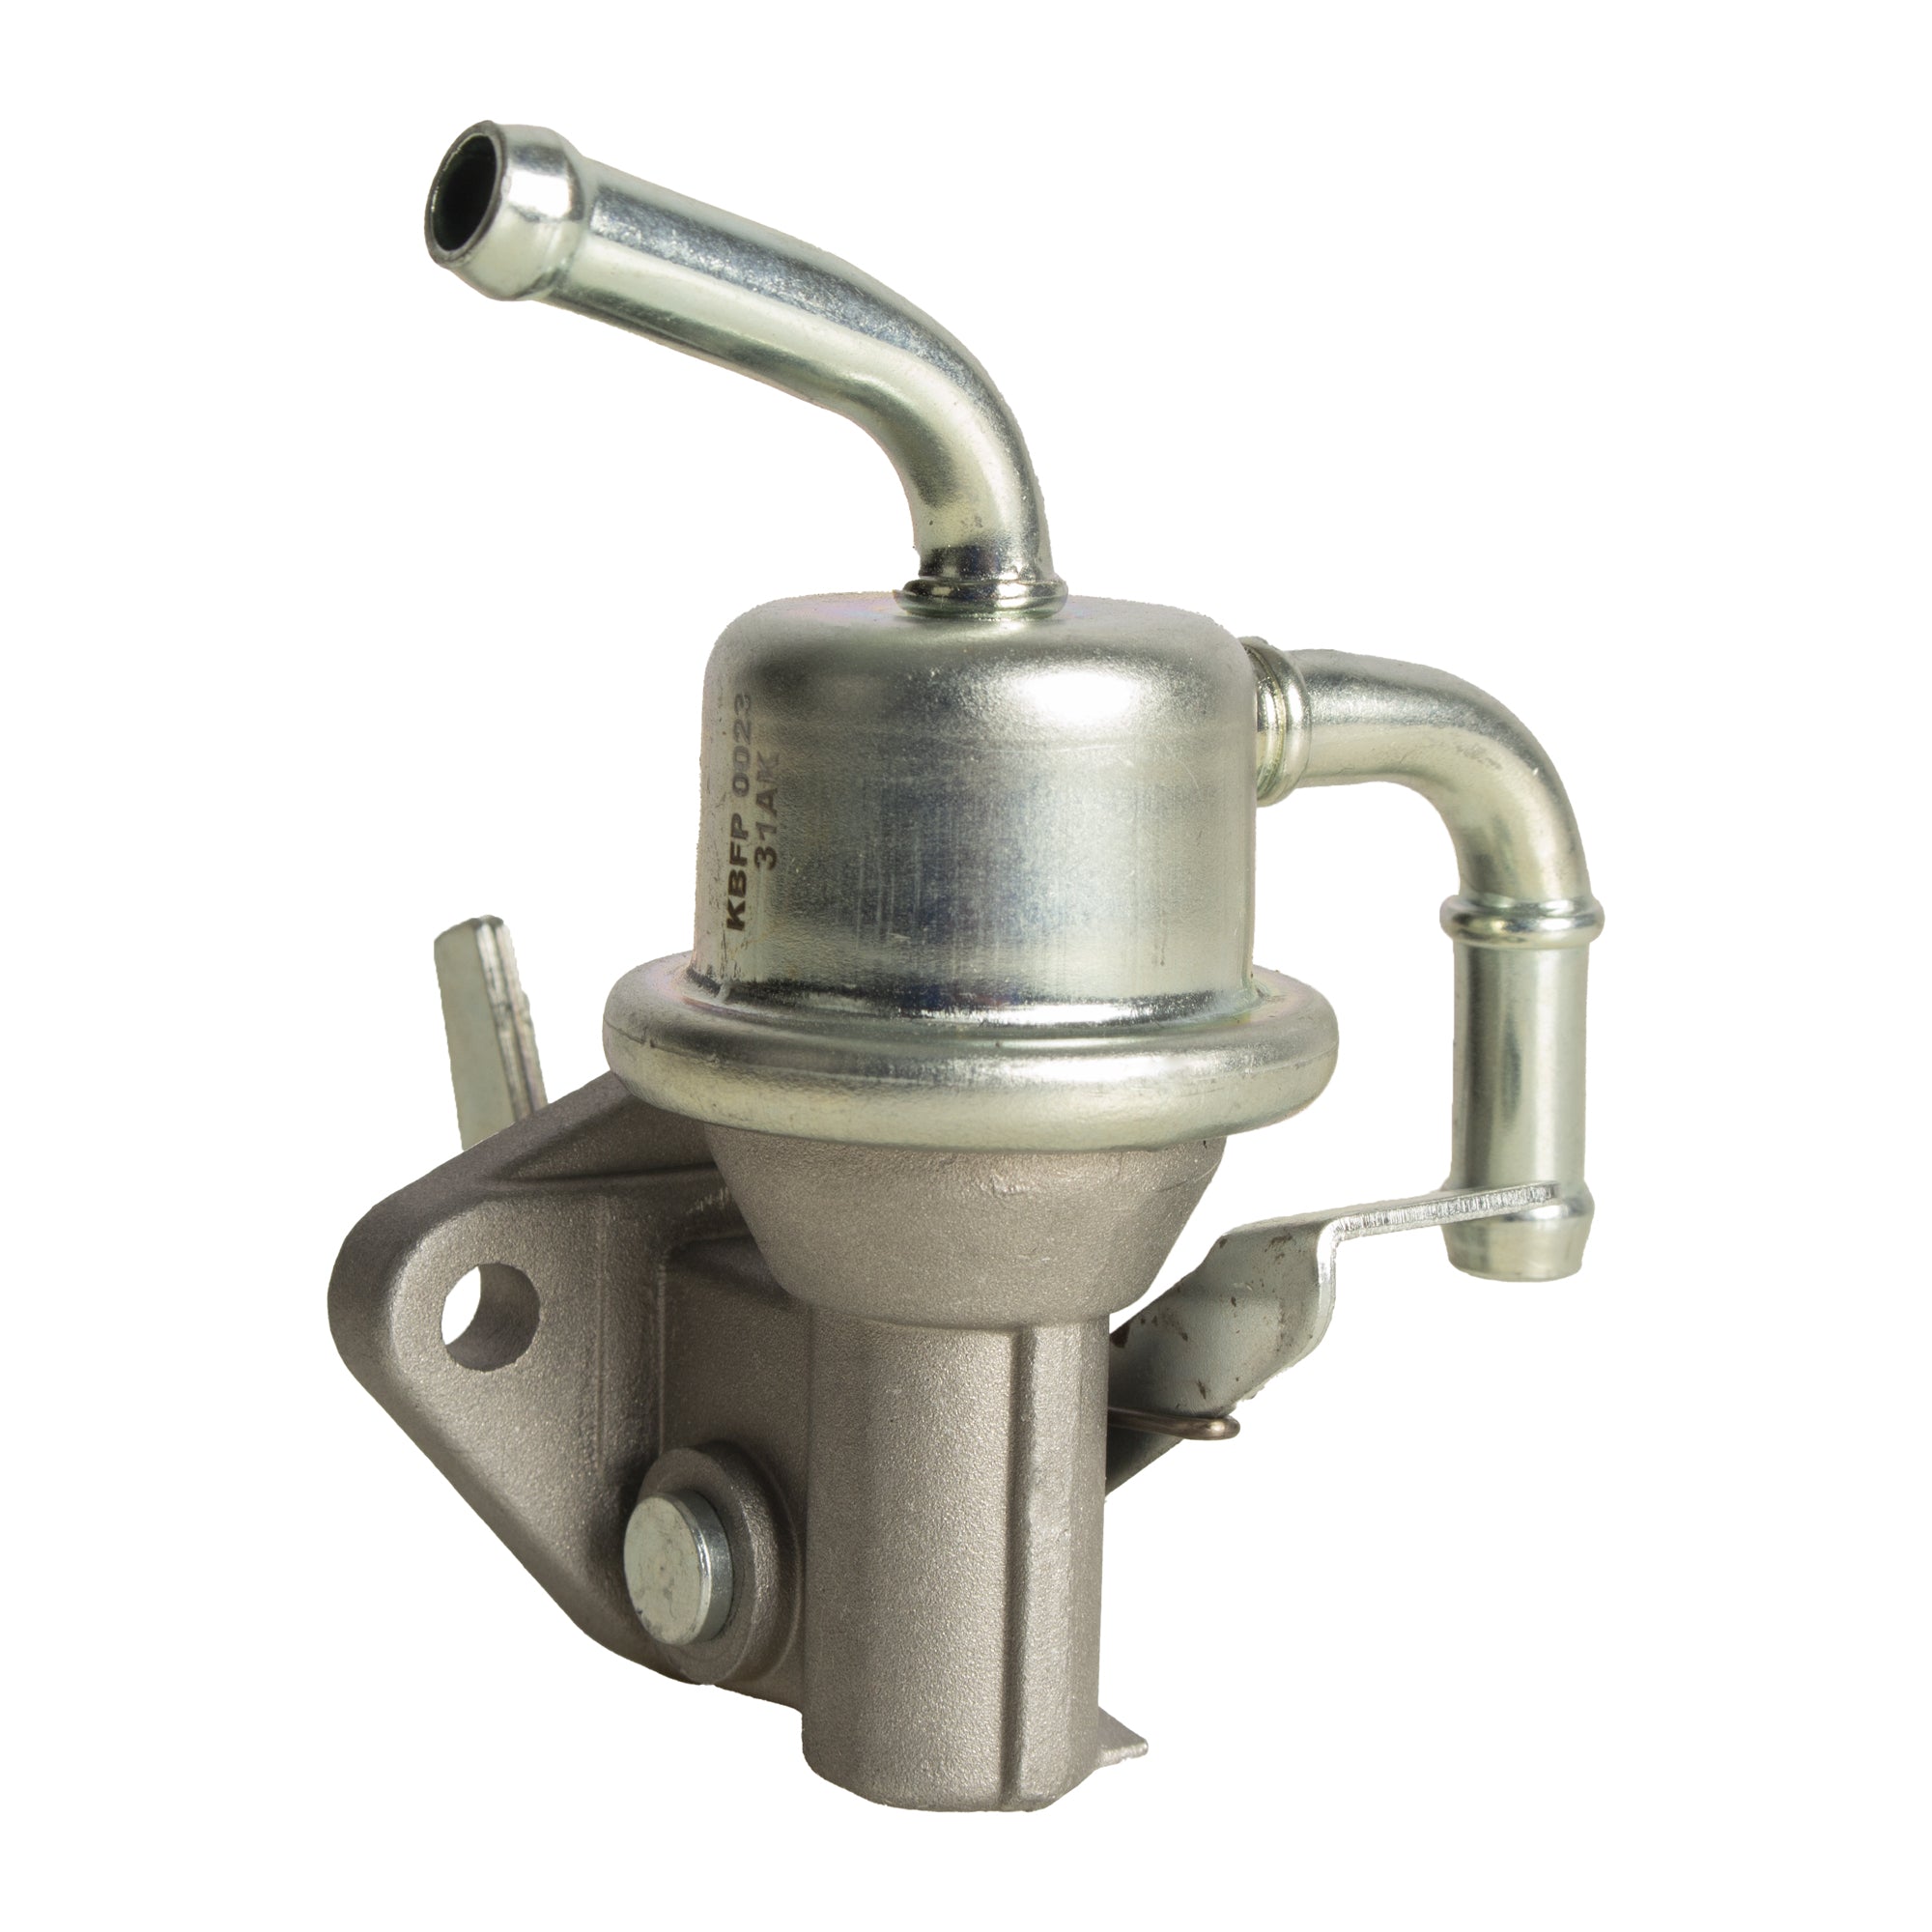 Fuel Pump Replacement for KUBOTA BOBCAT D1105 D1305 D905 V1505 16285-52032